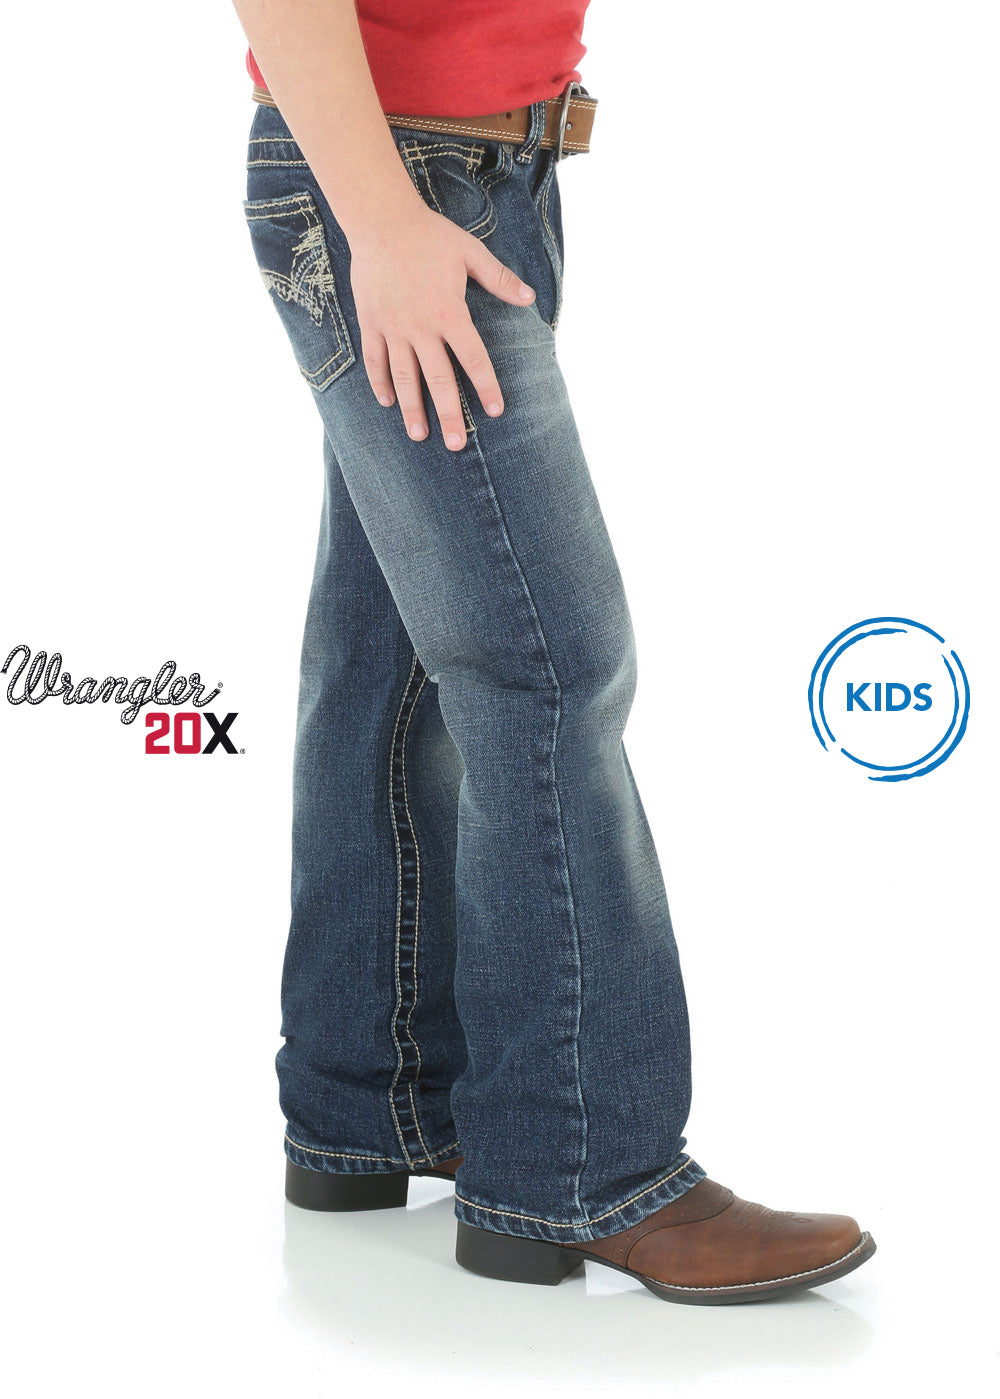 Wrangler Boys 20X 42 Vintage Boot Jean